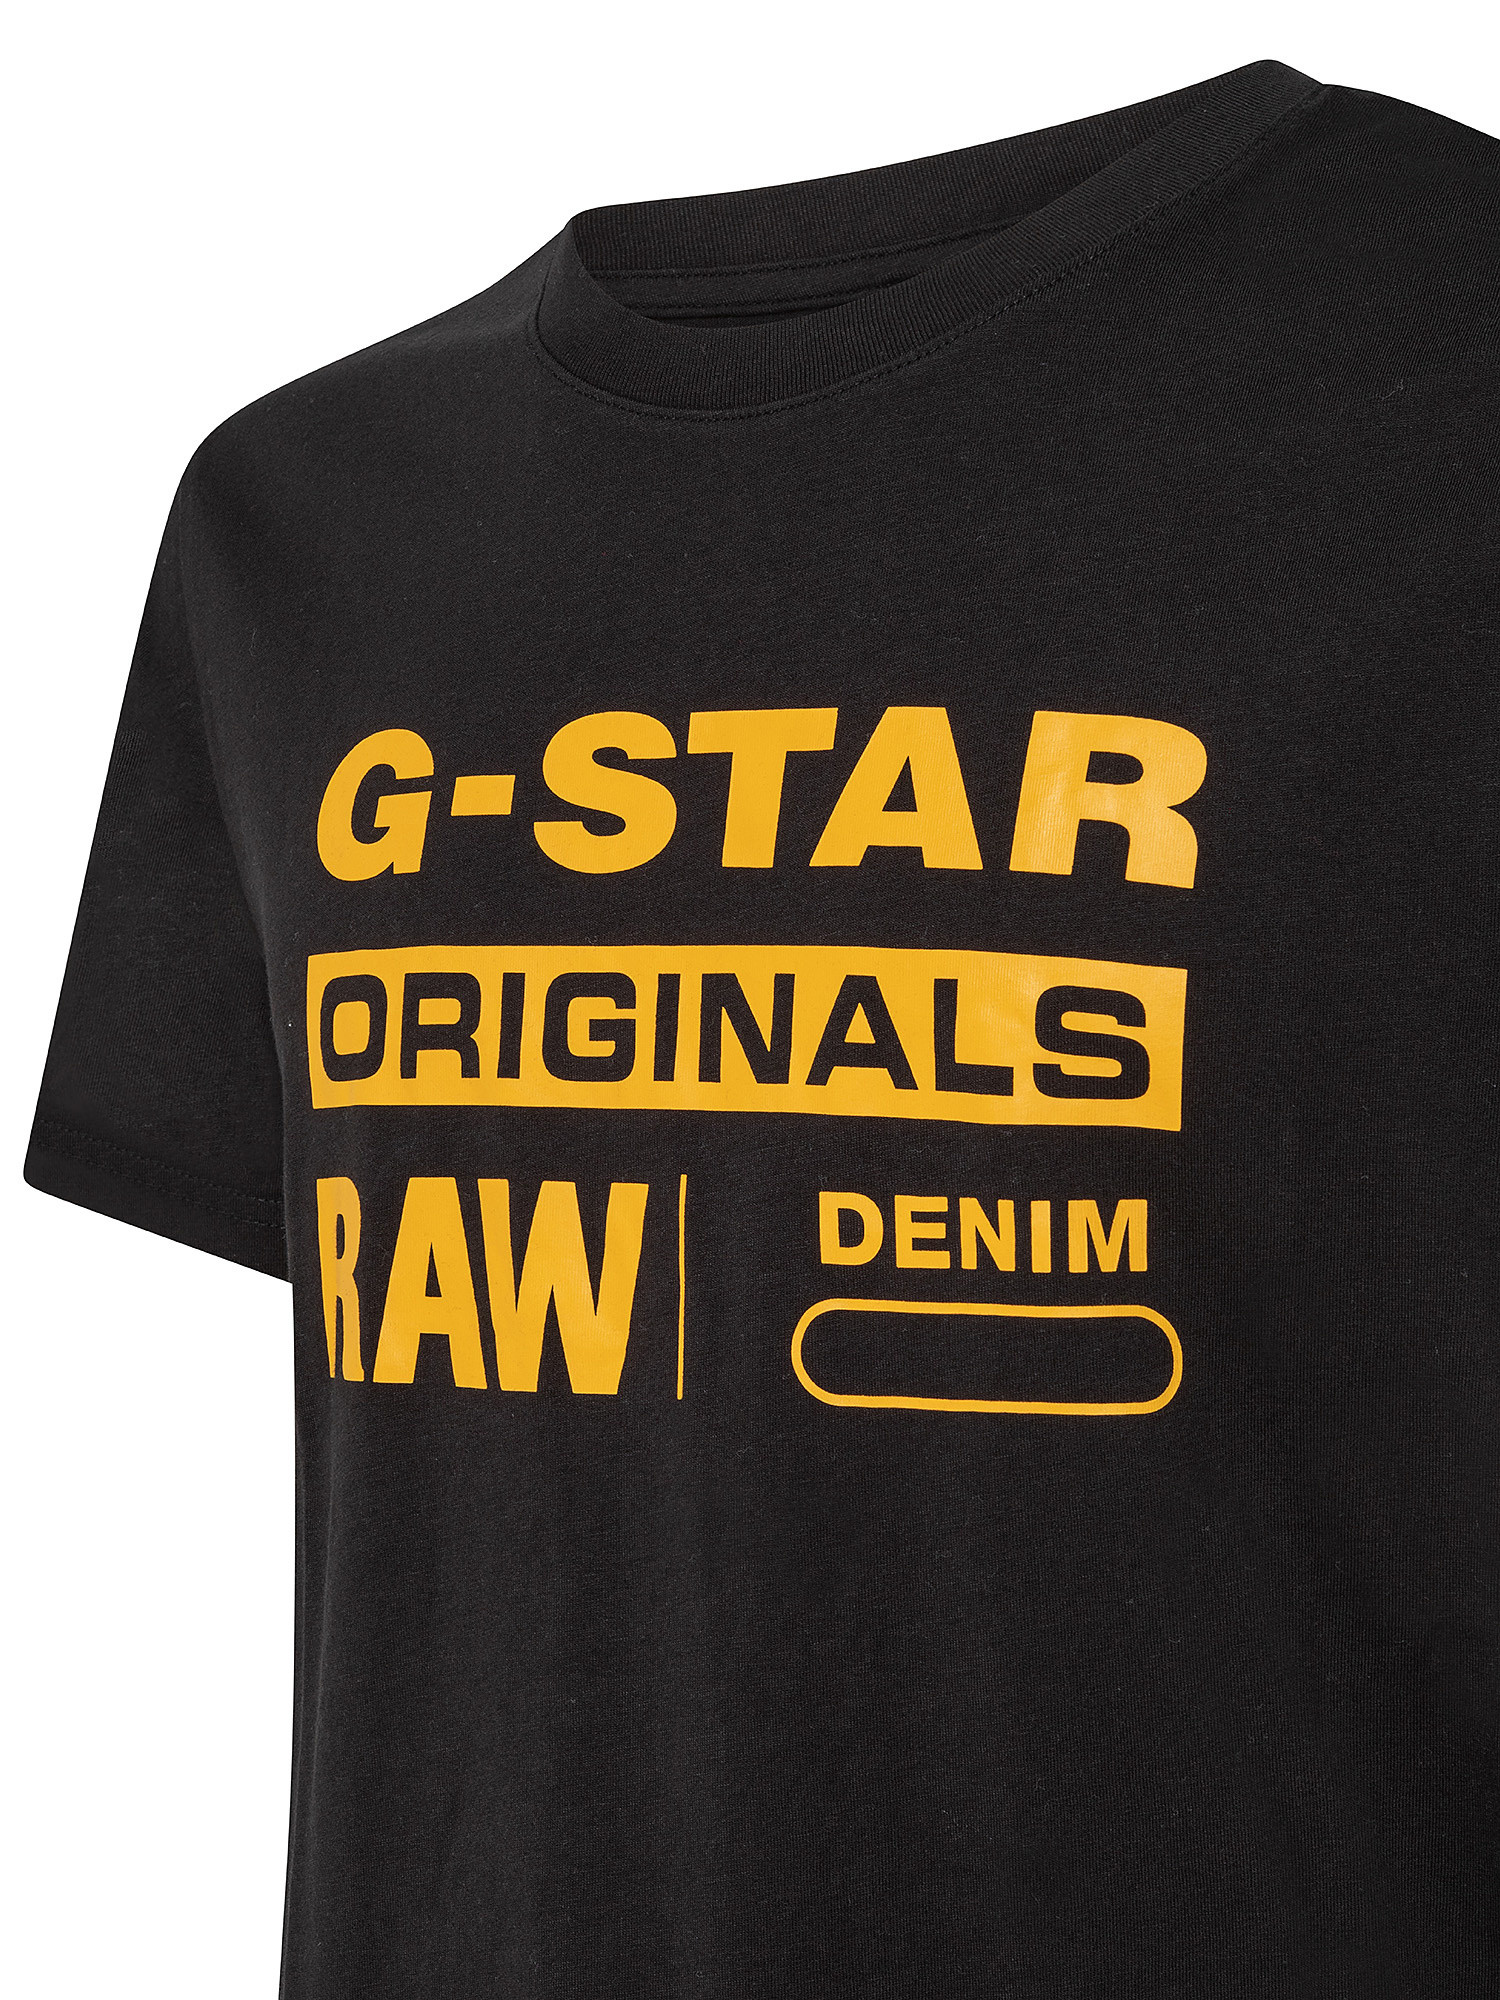 Raw slim graphic t-shirt, Black, large image number 2